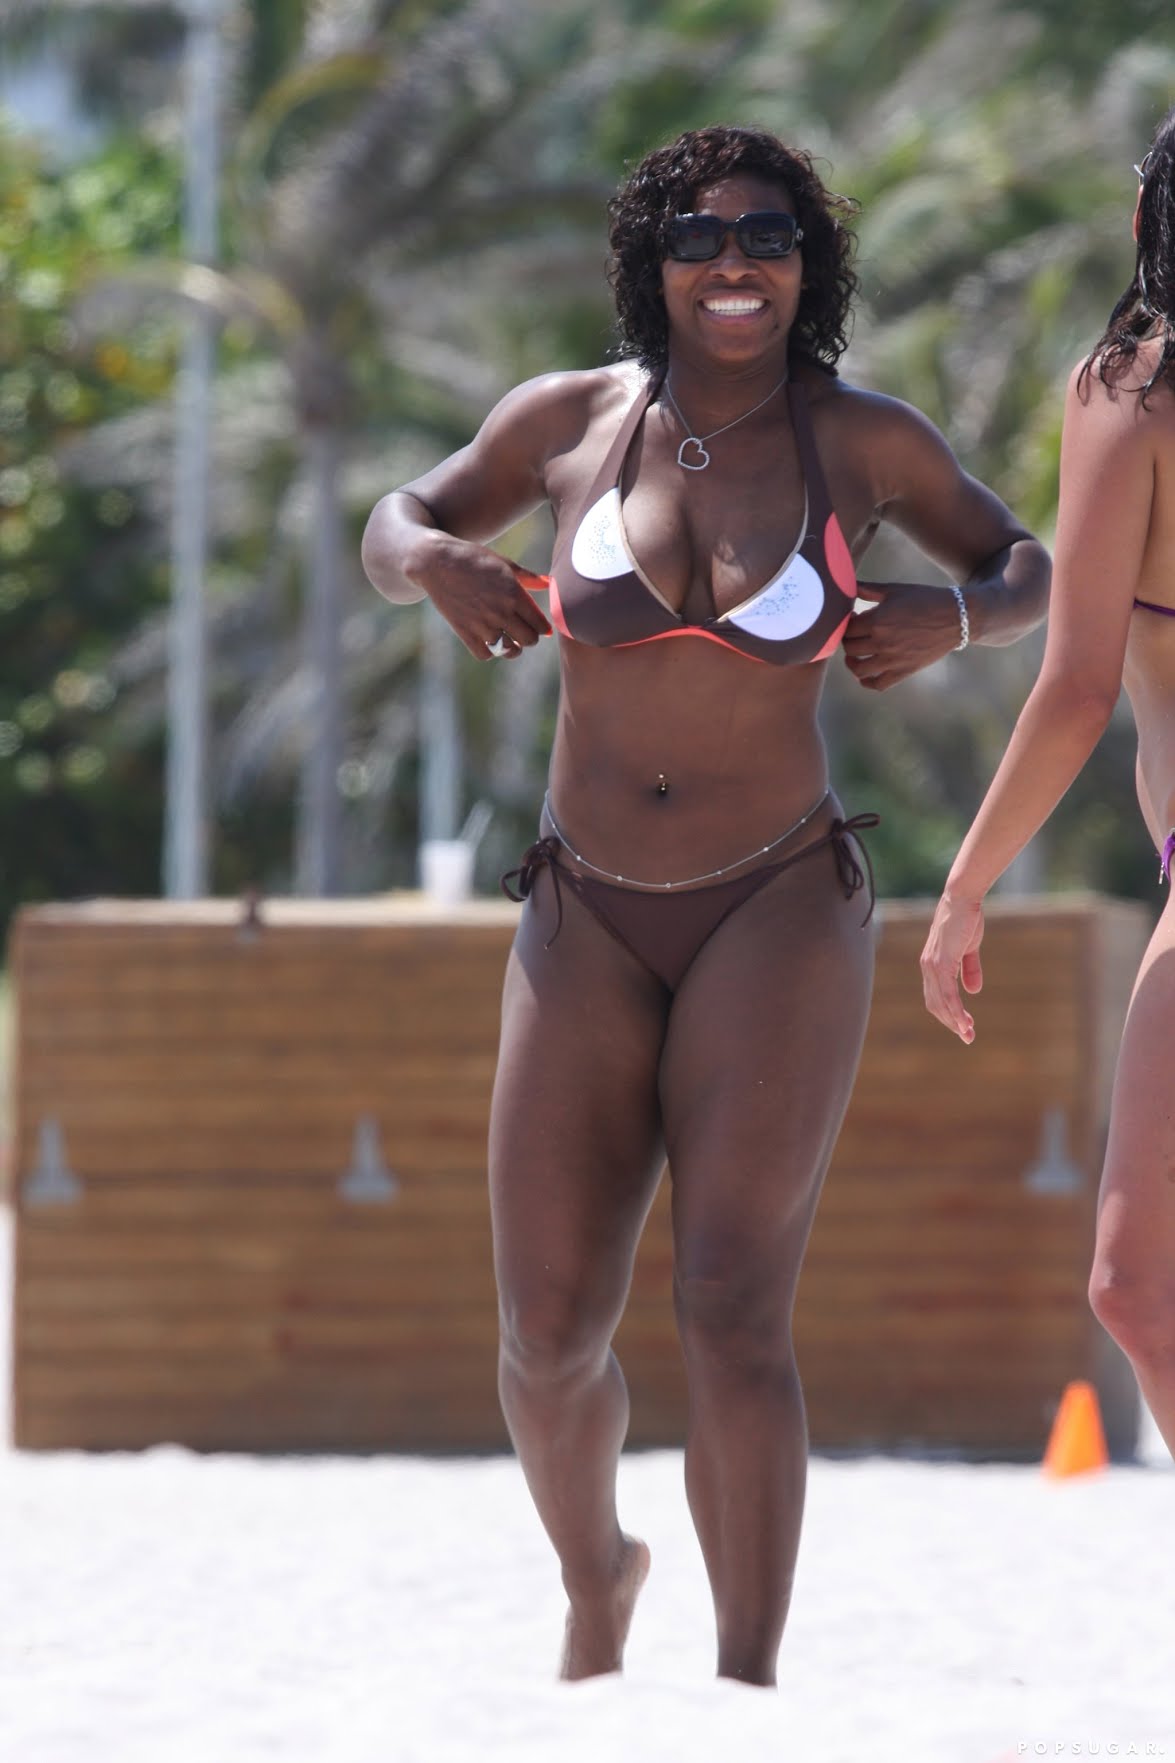 17 Times Serena Williams Showed Off Her Powerhouse Body in a Bikini